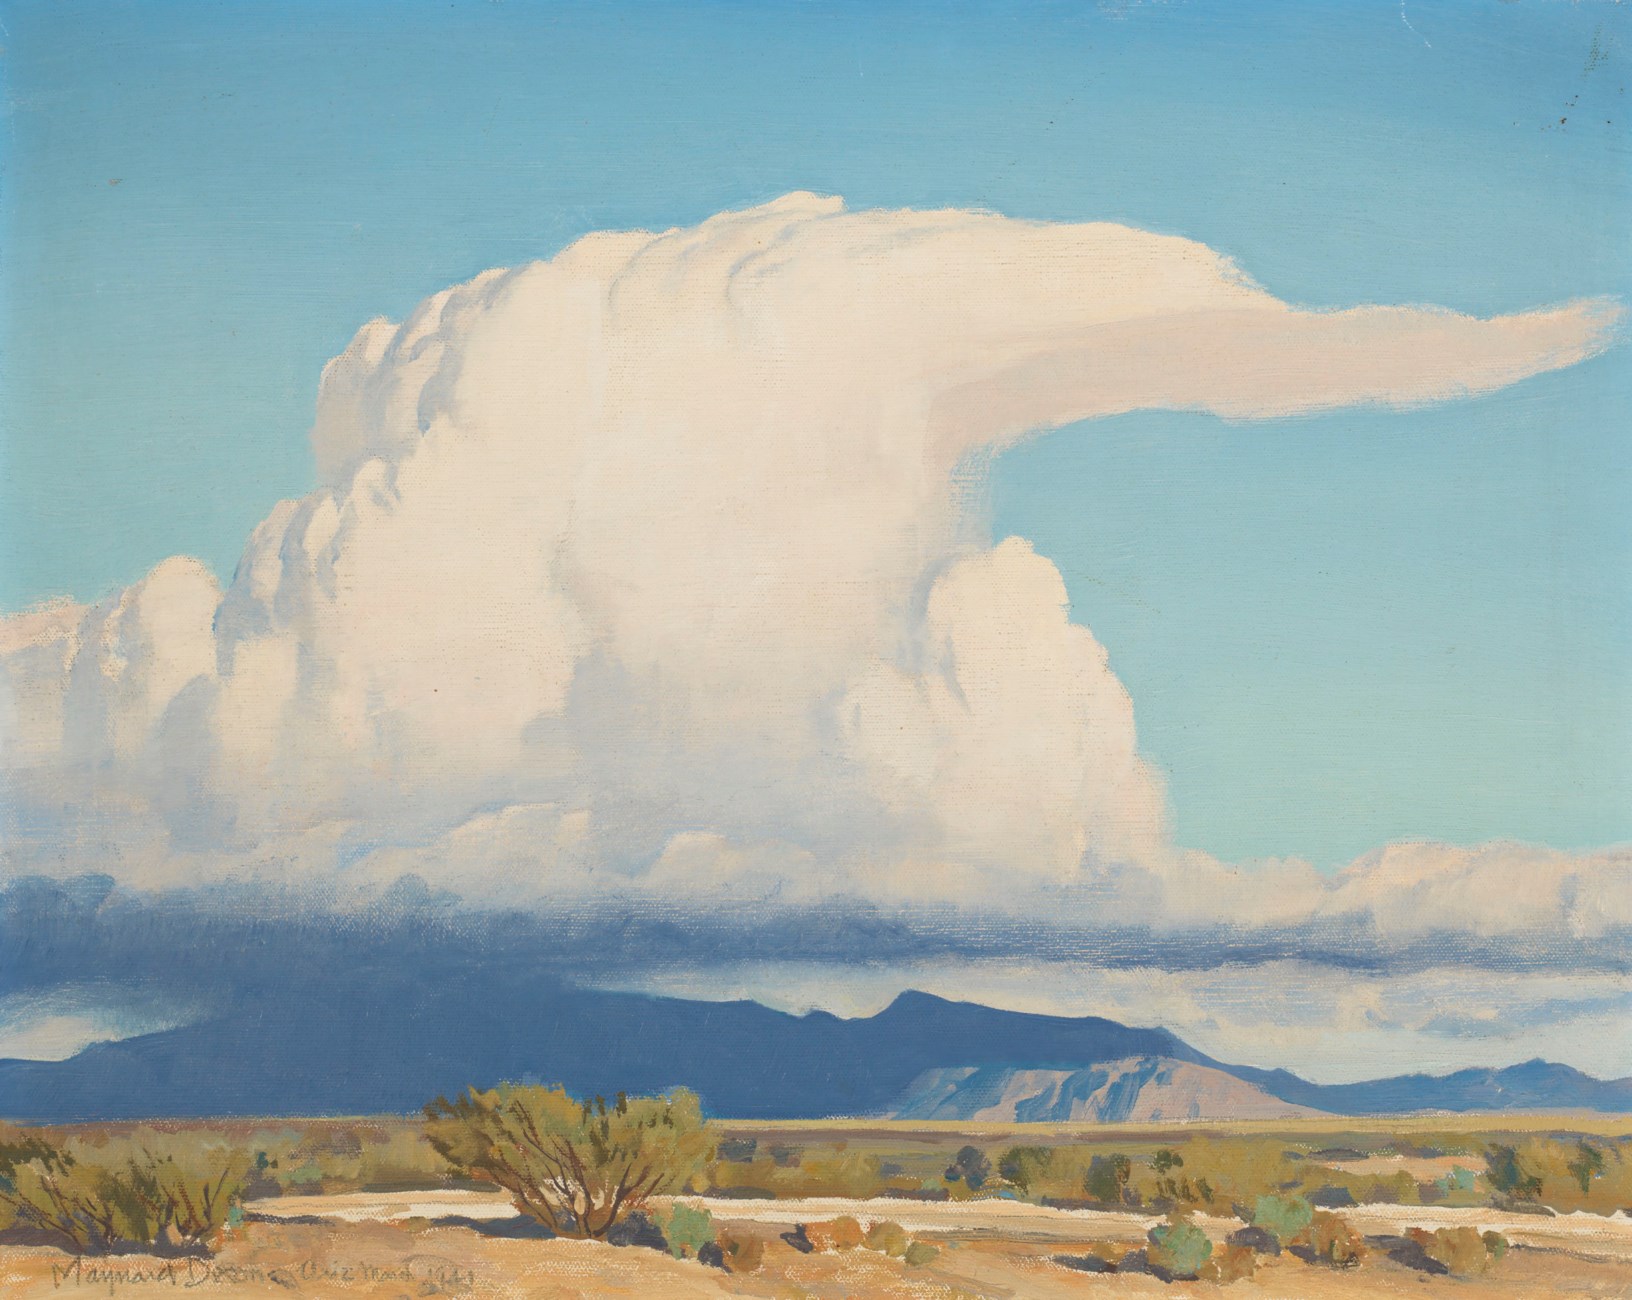 Bulut (orig. "Cloud") by Maynard Dixon - 1941 - 40.6 x 50.8 cm özel koleksiyon